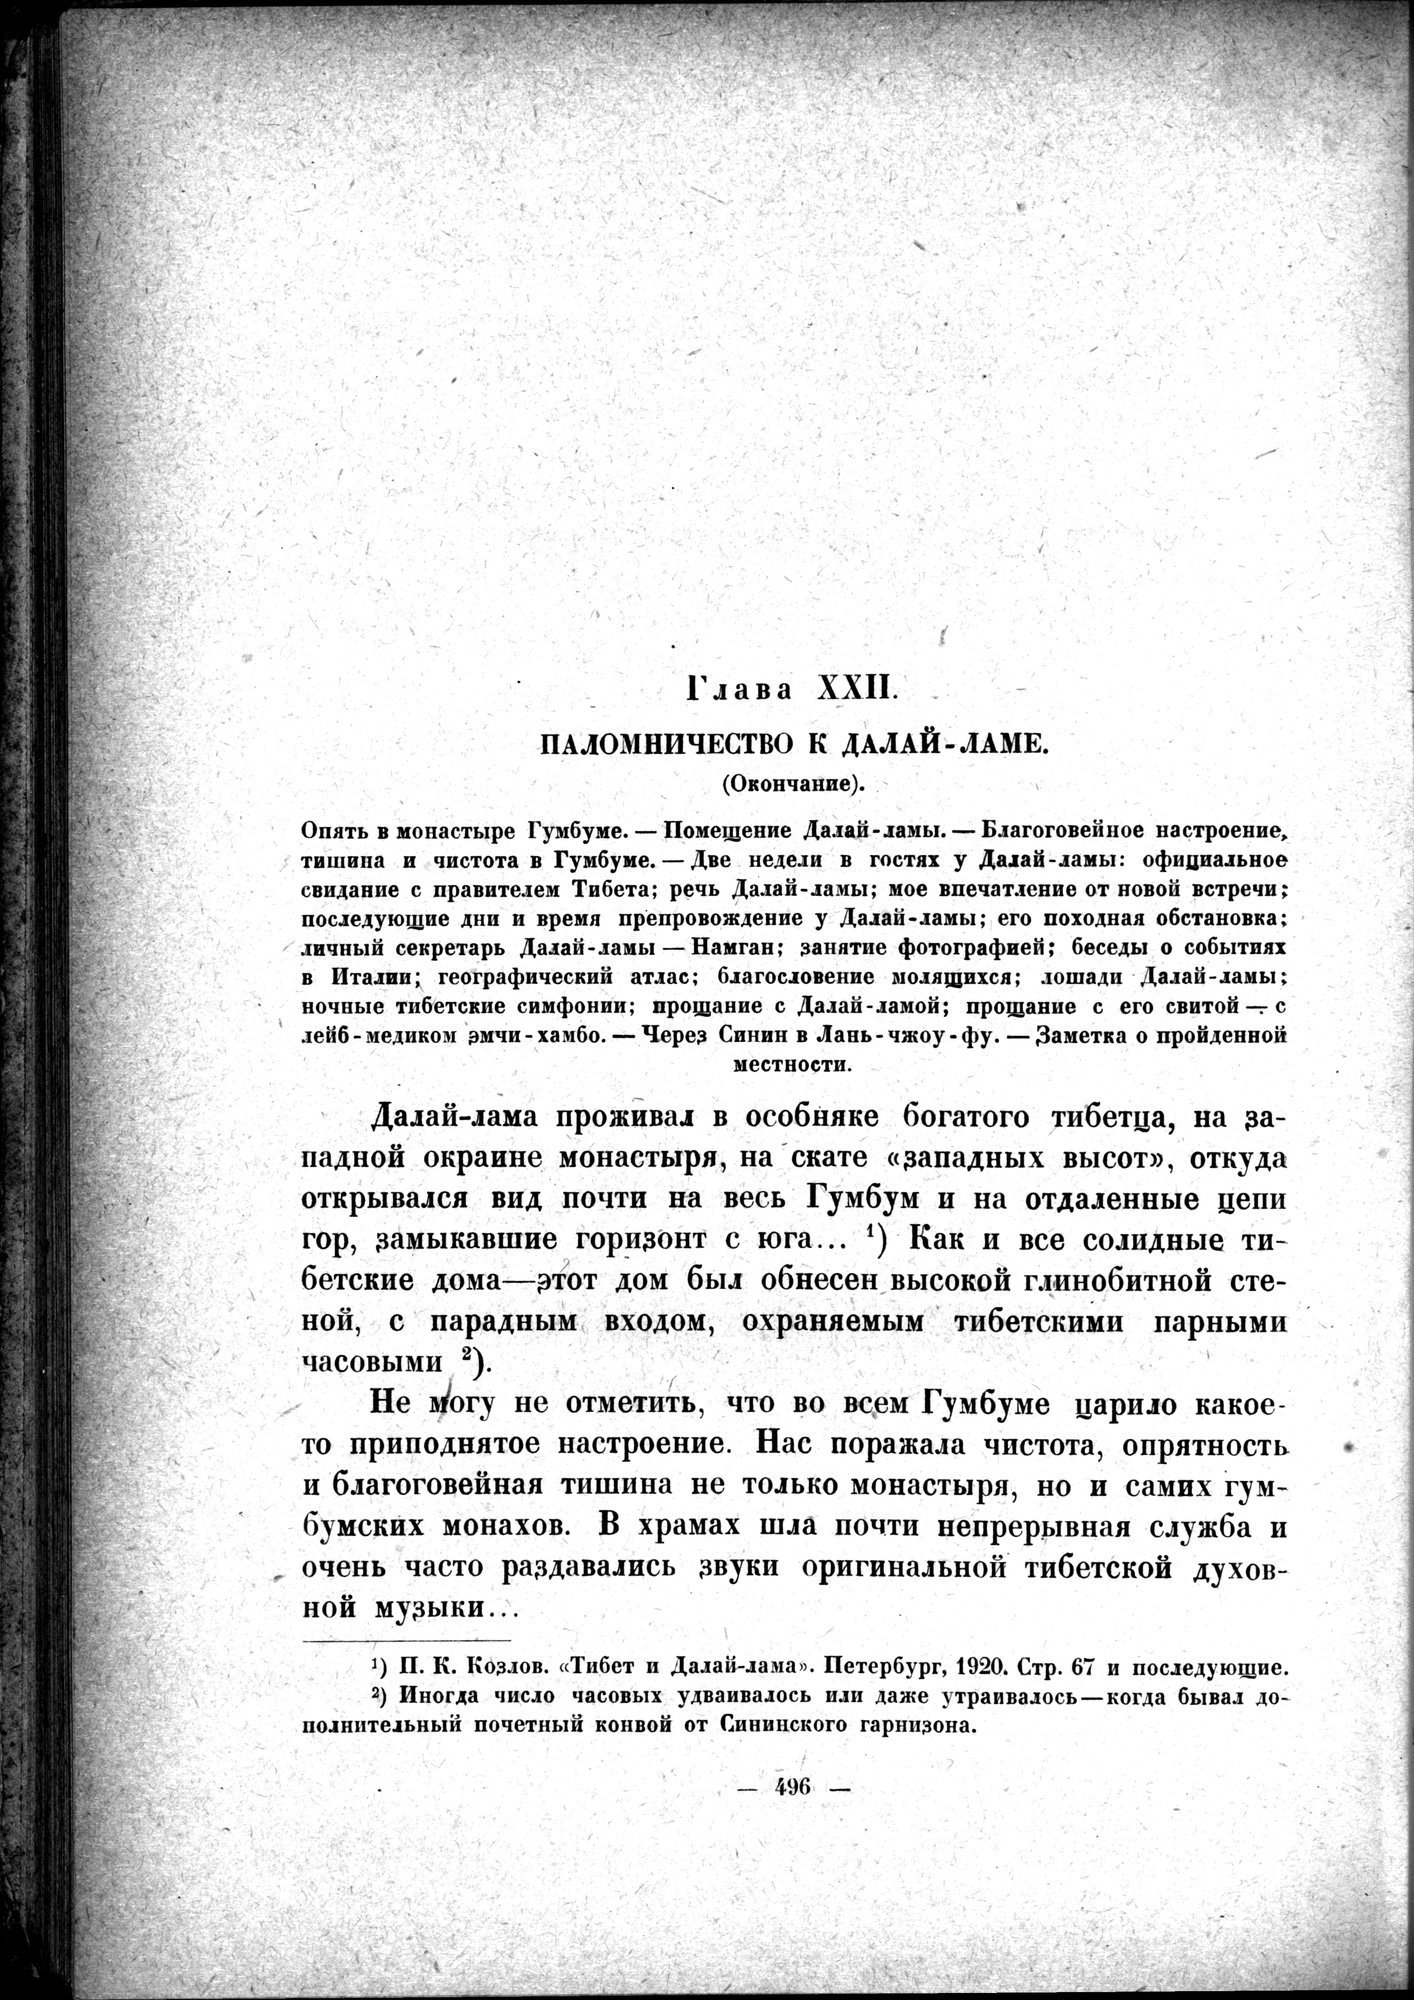 Mongoliya i Amdo i mertby gorod Khara-Khoto : vol.1 / Page 568 (Grayscale High Resolution Image)